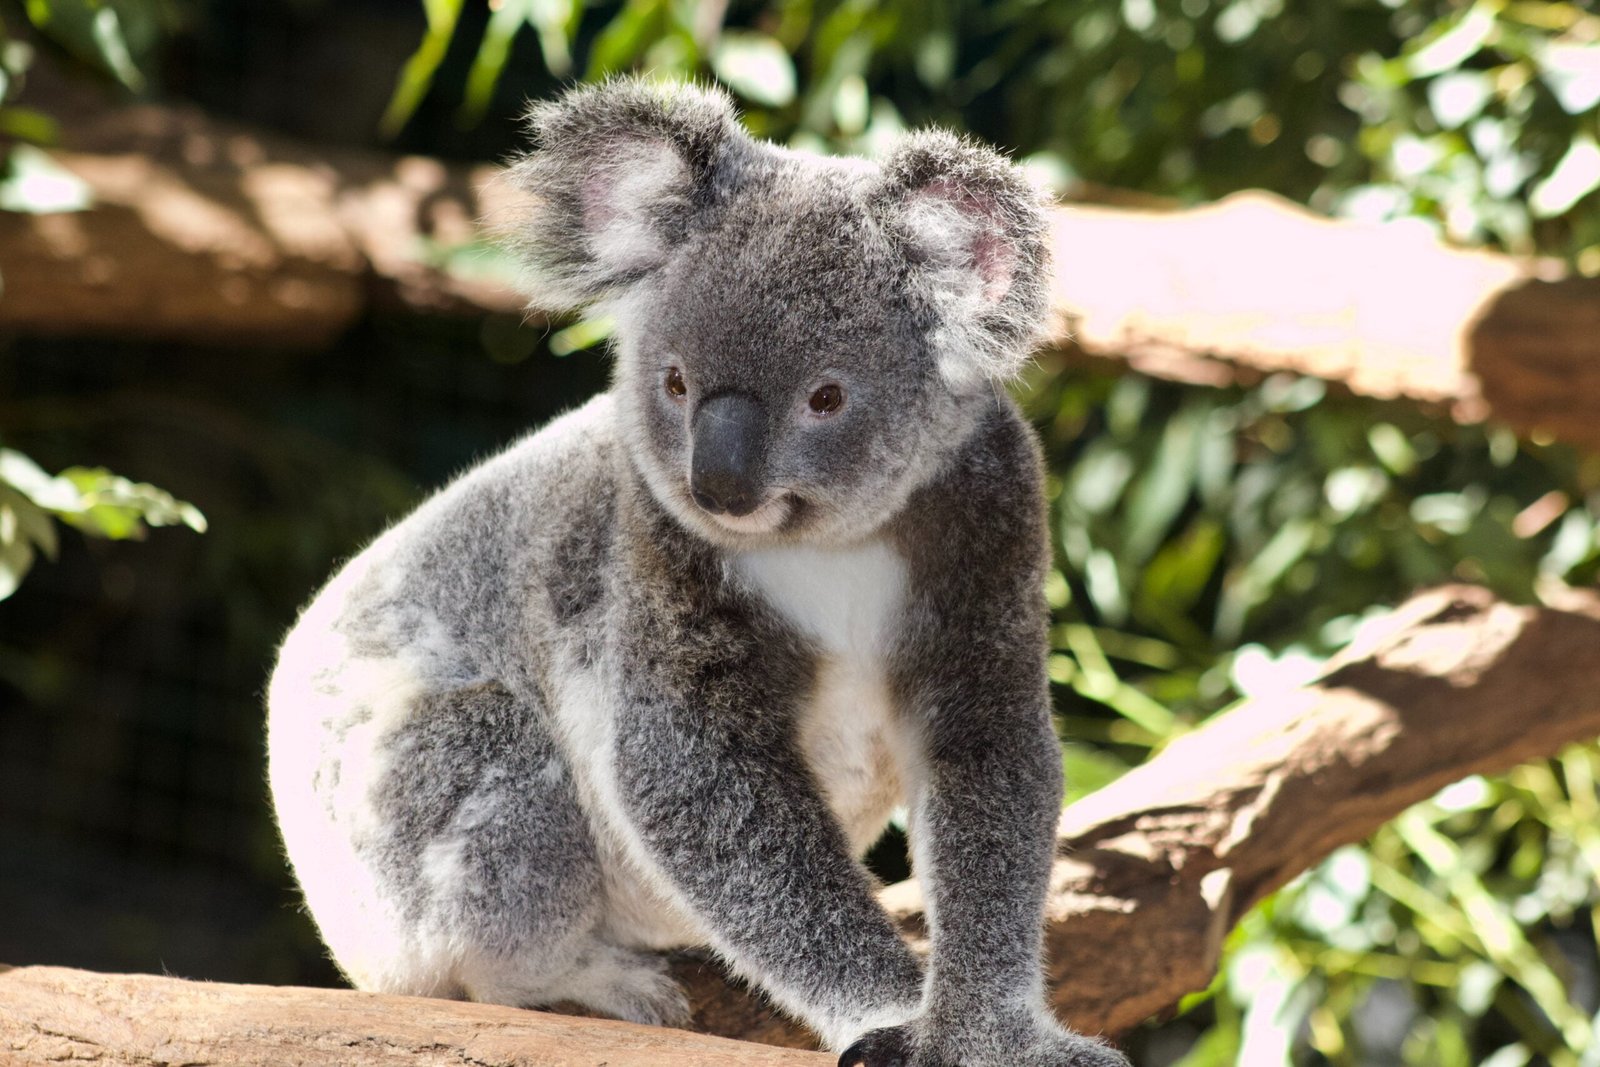 A photograph of a koala